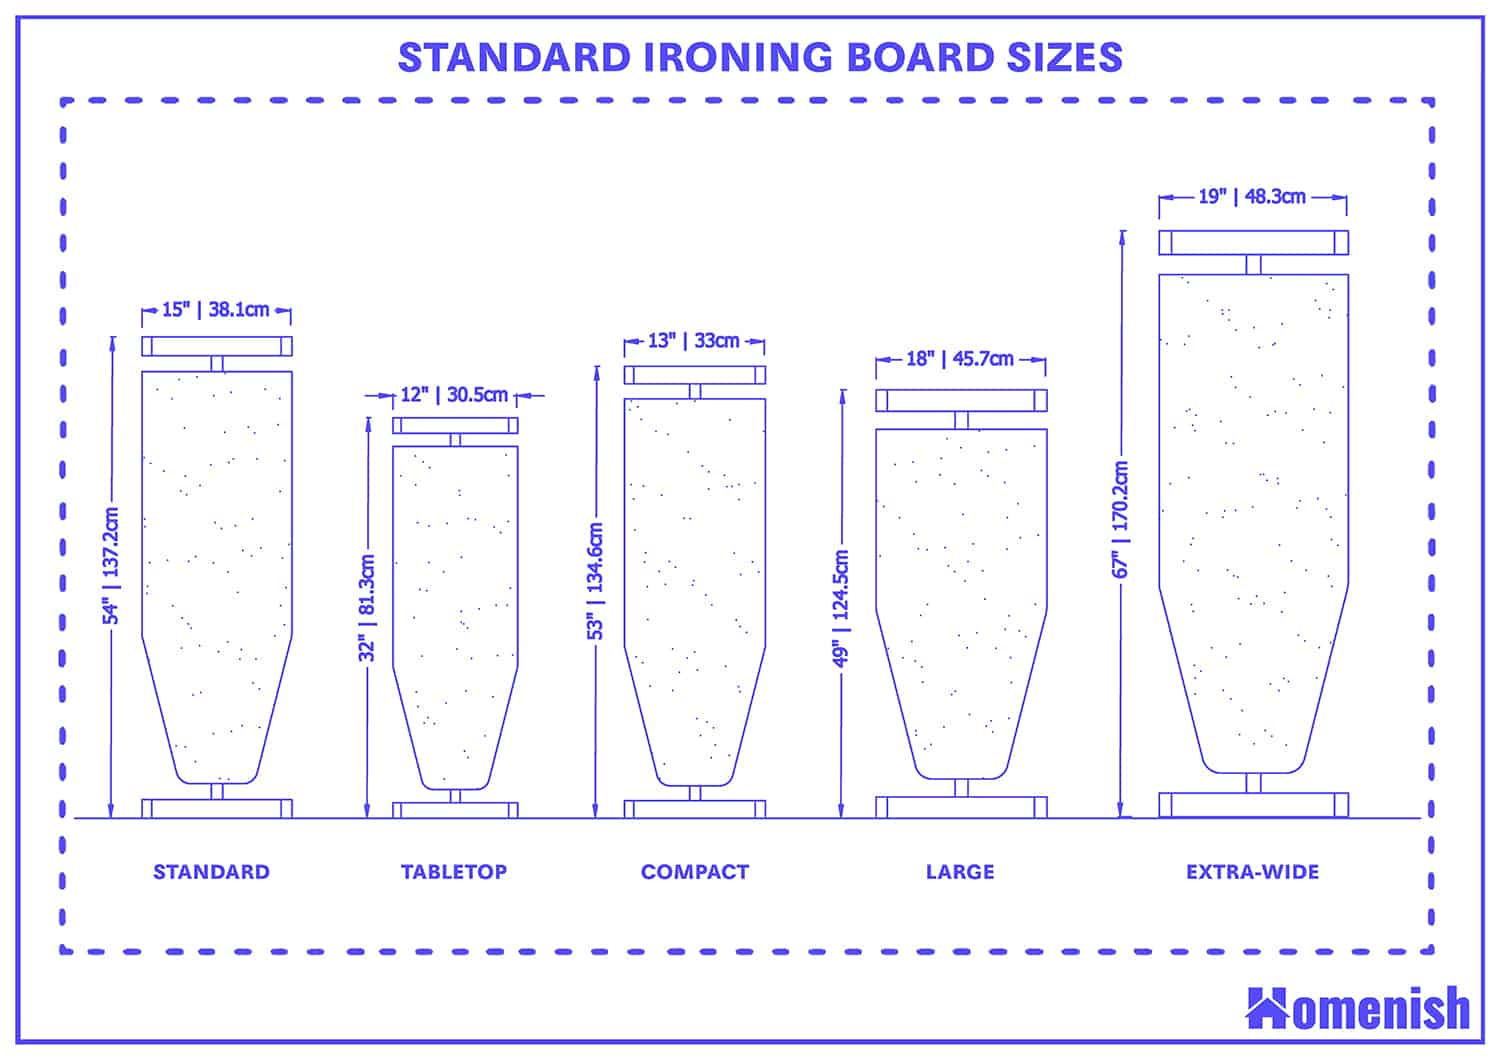 Standard ironing board sizes